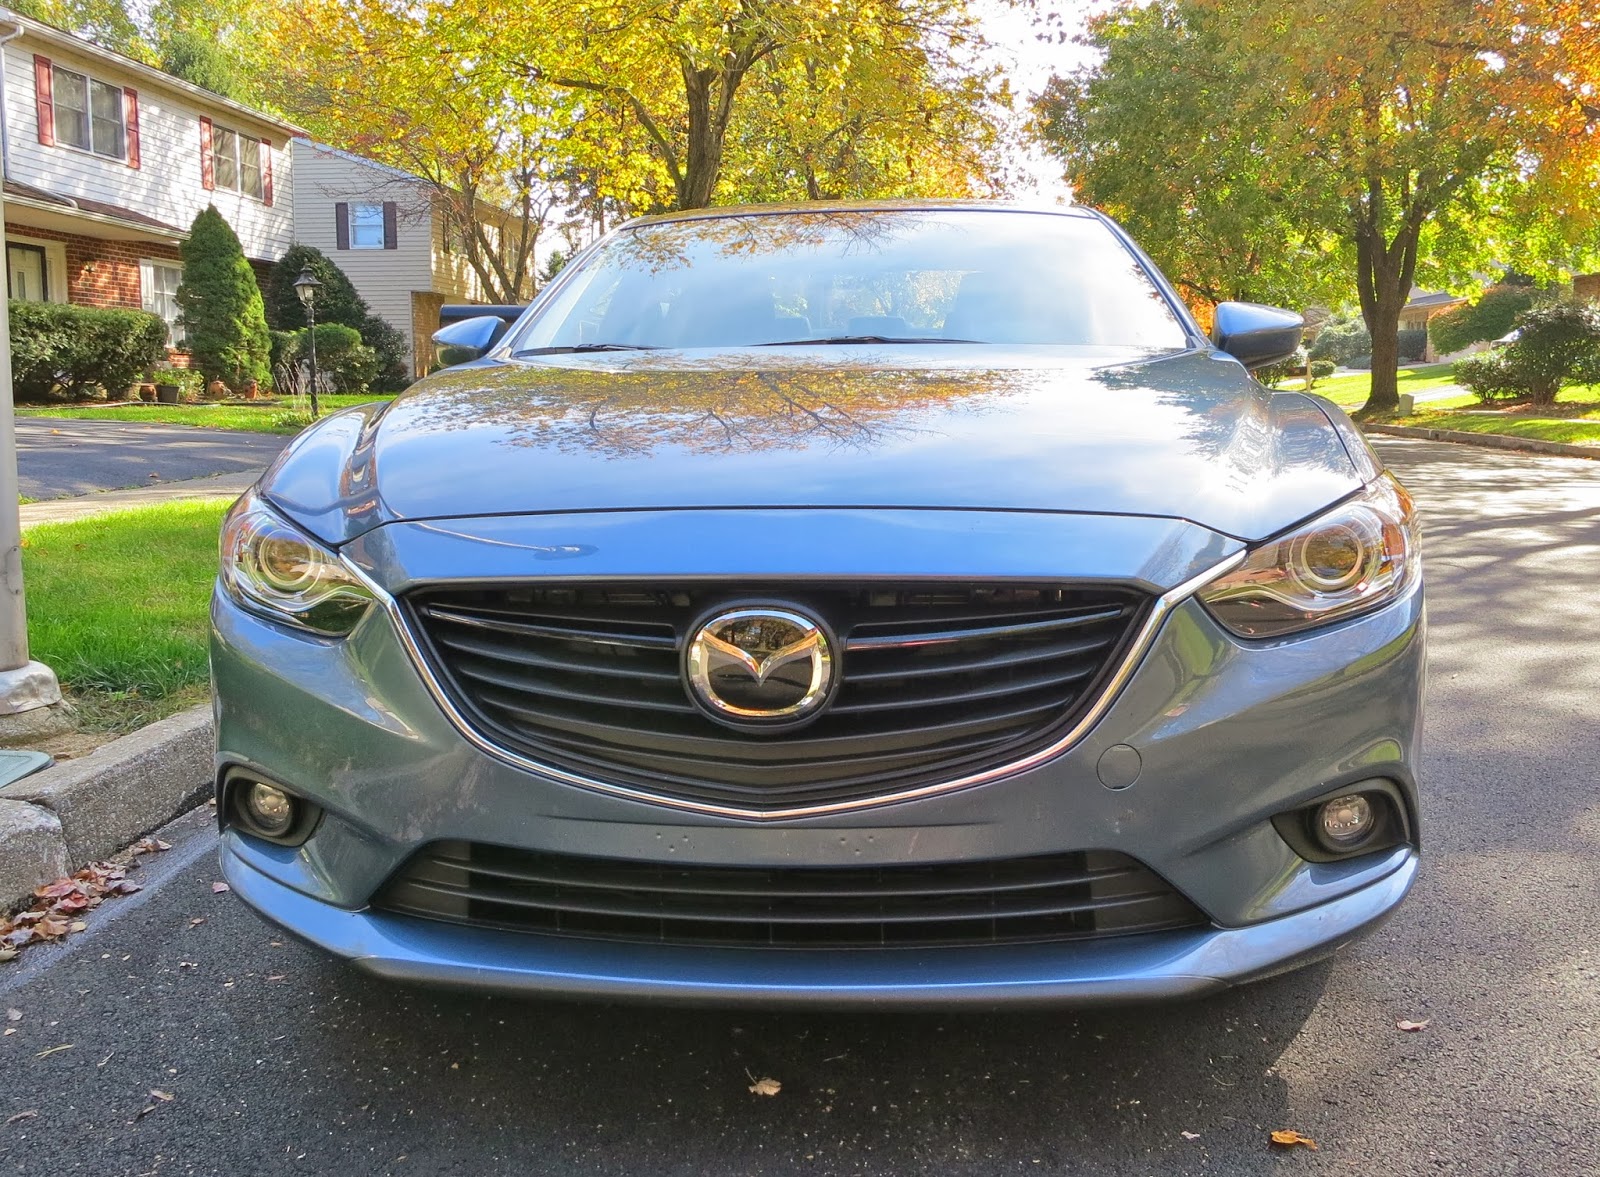 Ask Away...: An Upclose Look at the 2014 Mazda6